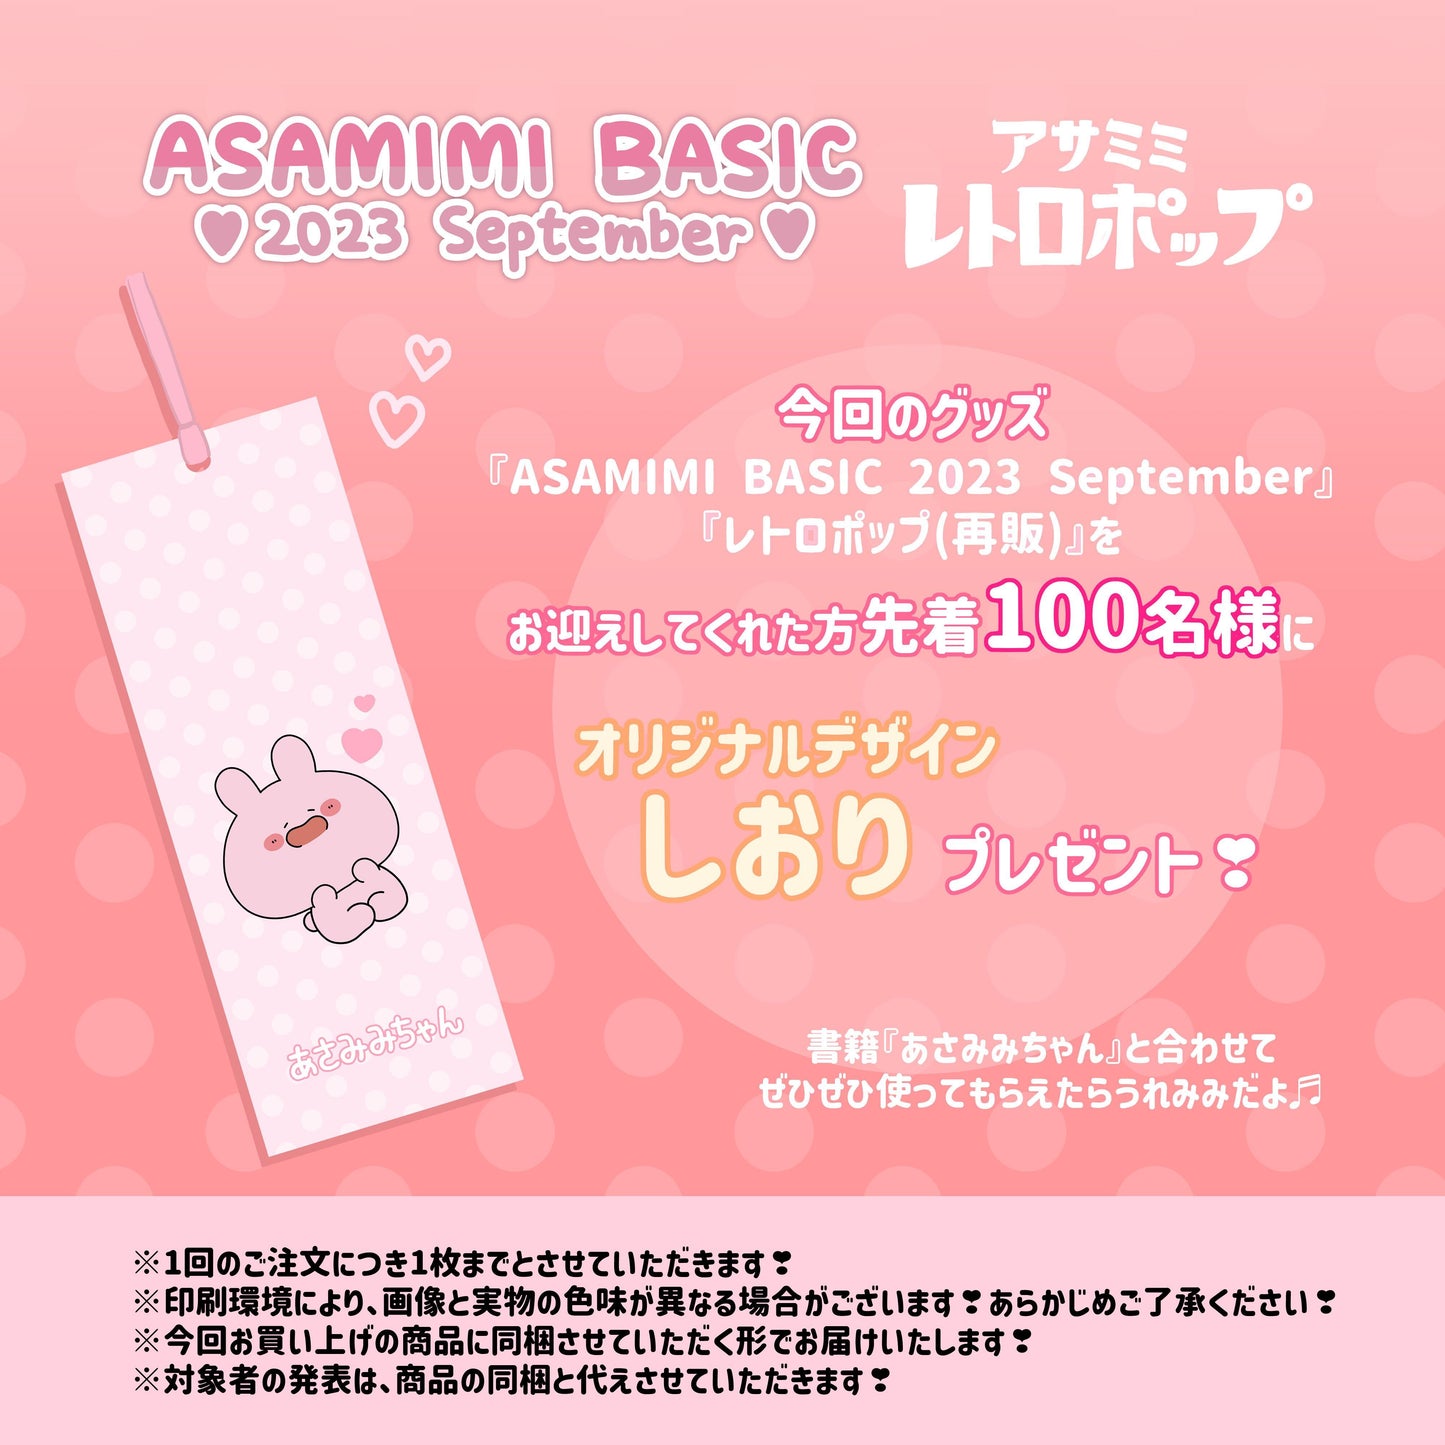 [Asamimi-chan] PVC multi case (large) (retro) [shipped in mid-November]